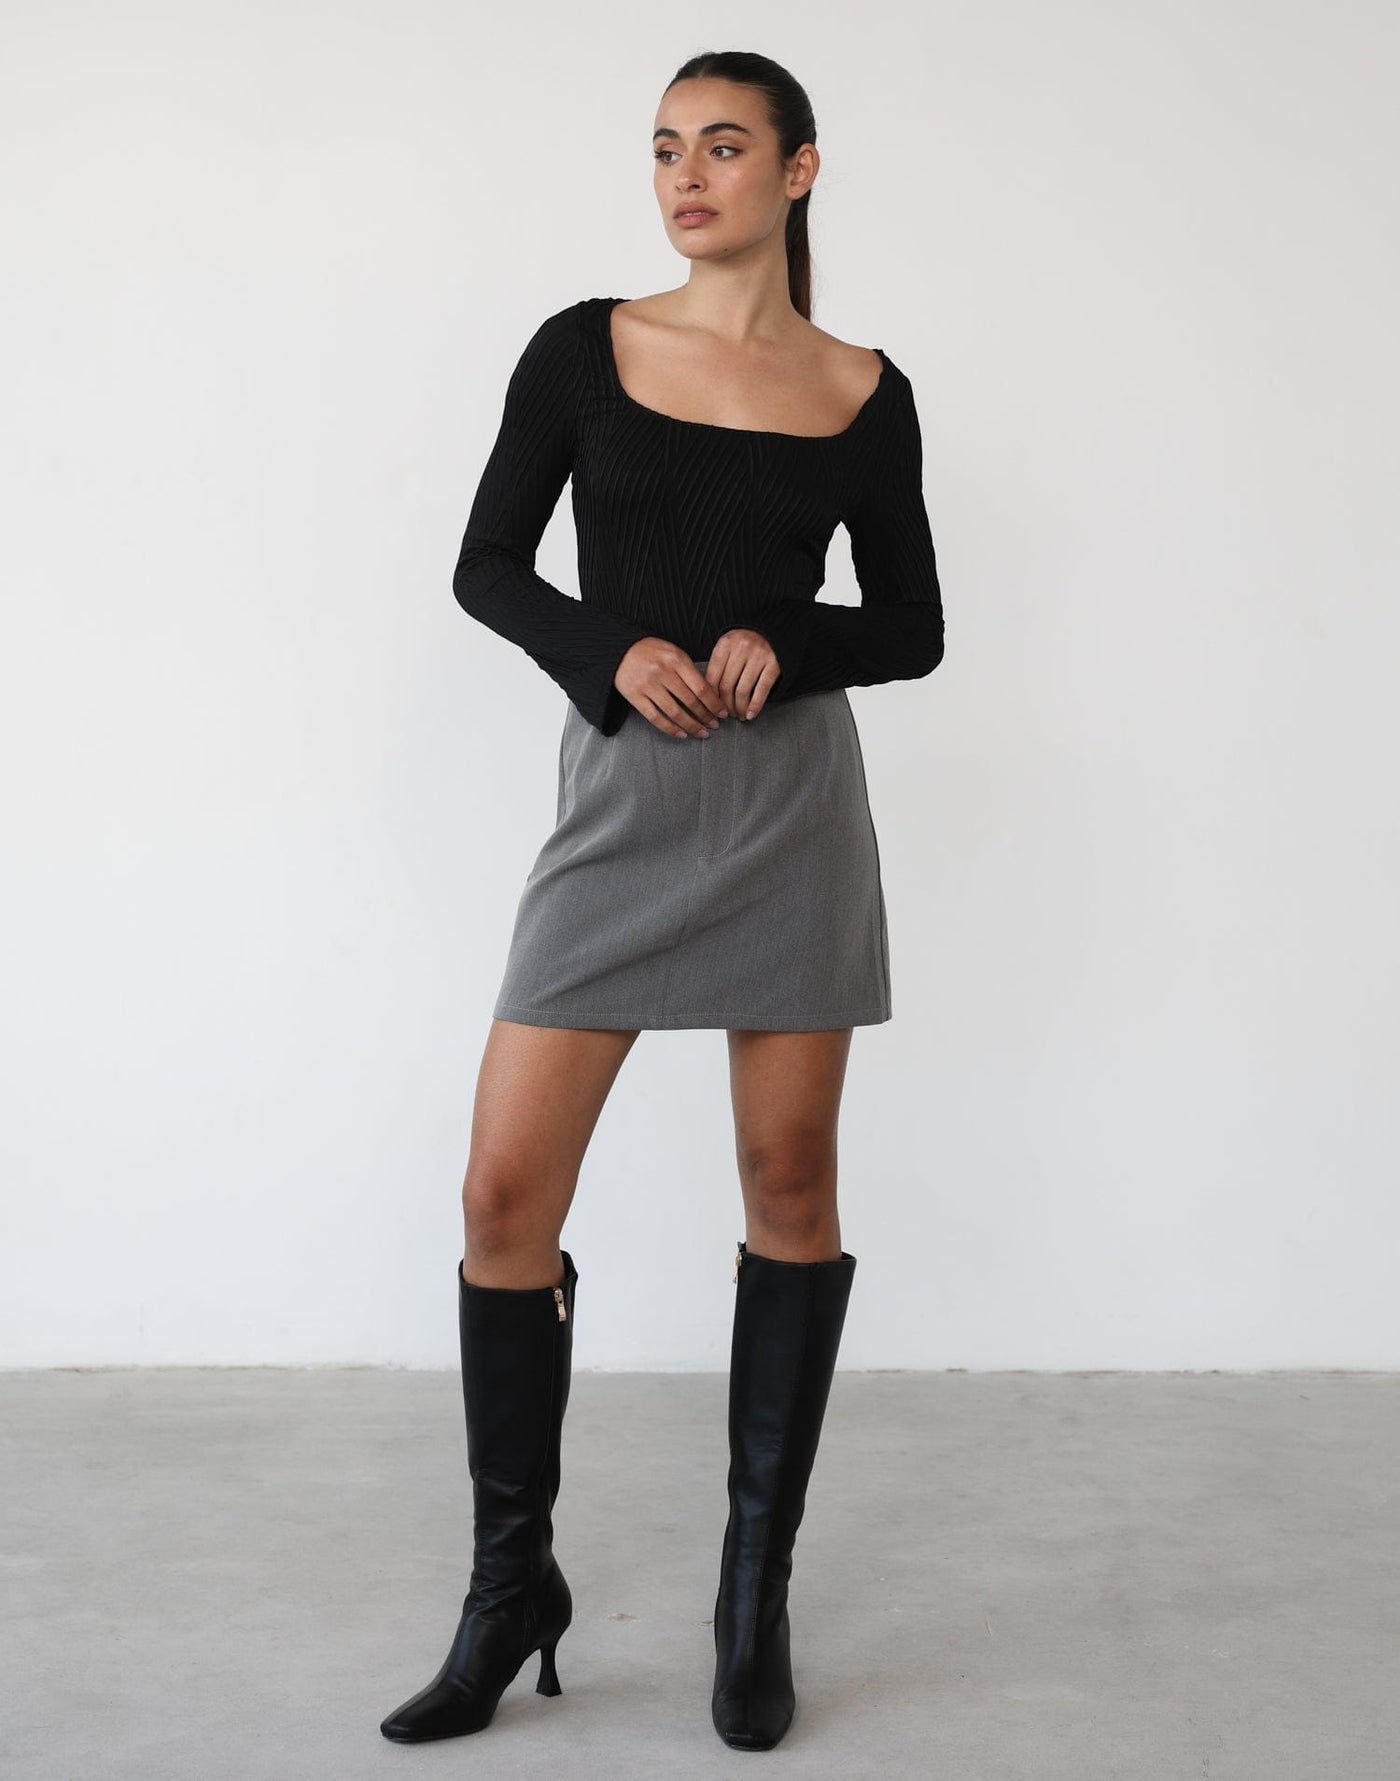 Khloe Long Sleeve Bodysuit (Black) - Black Long Sleeve Bodysuit - Women's Top - Charcoal Clothing